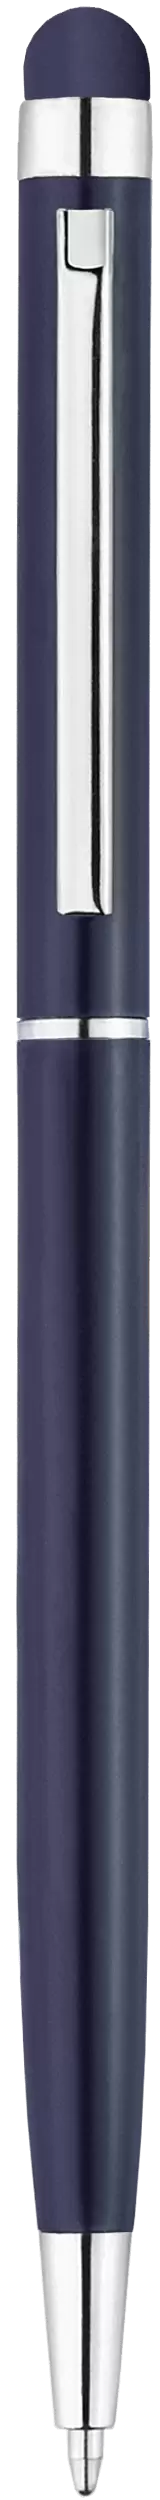 Ручка KENO Темно-синяя 1117-14